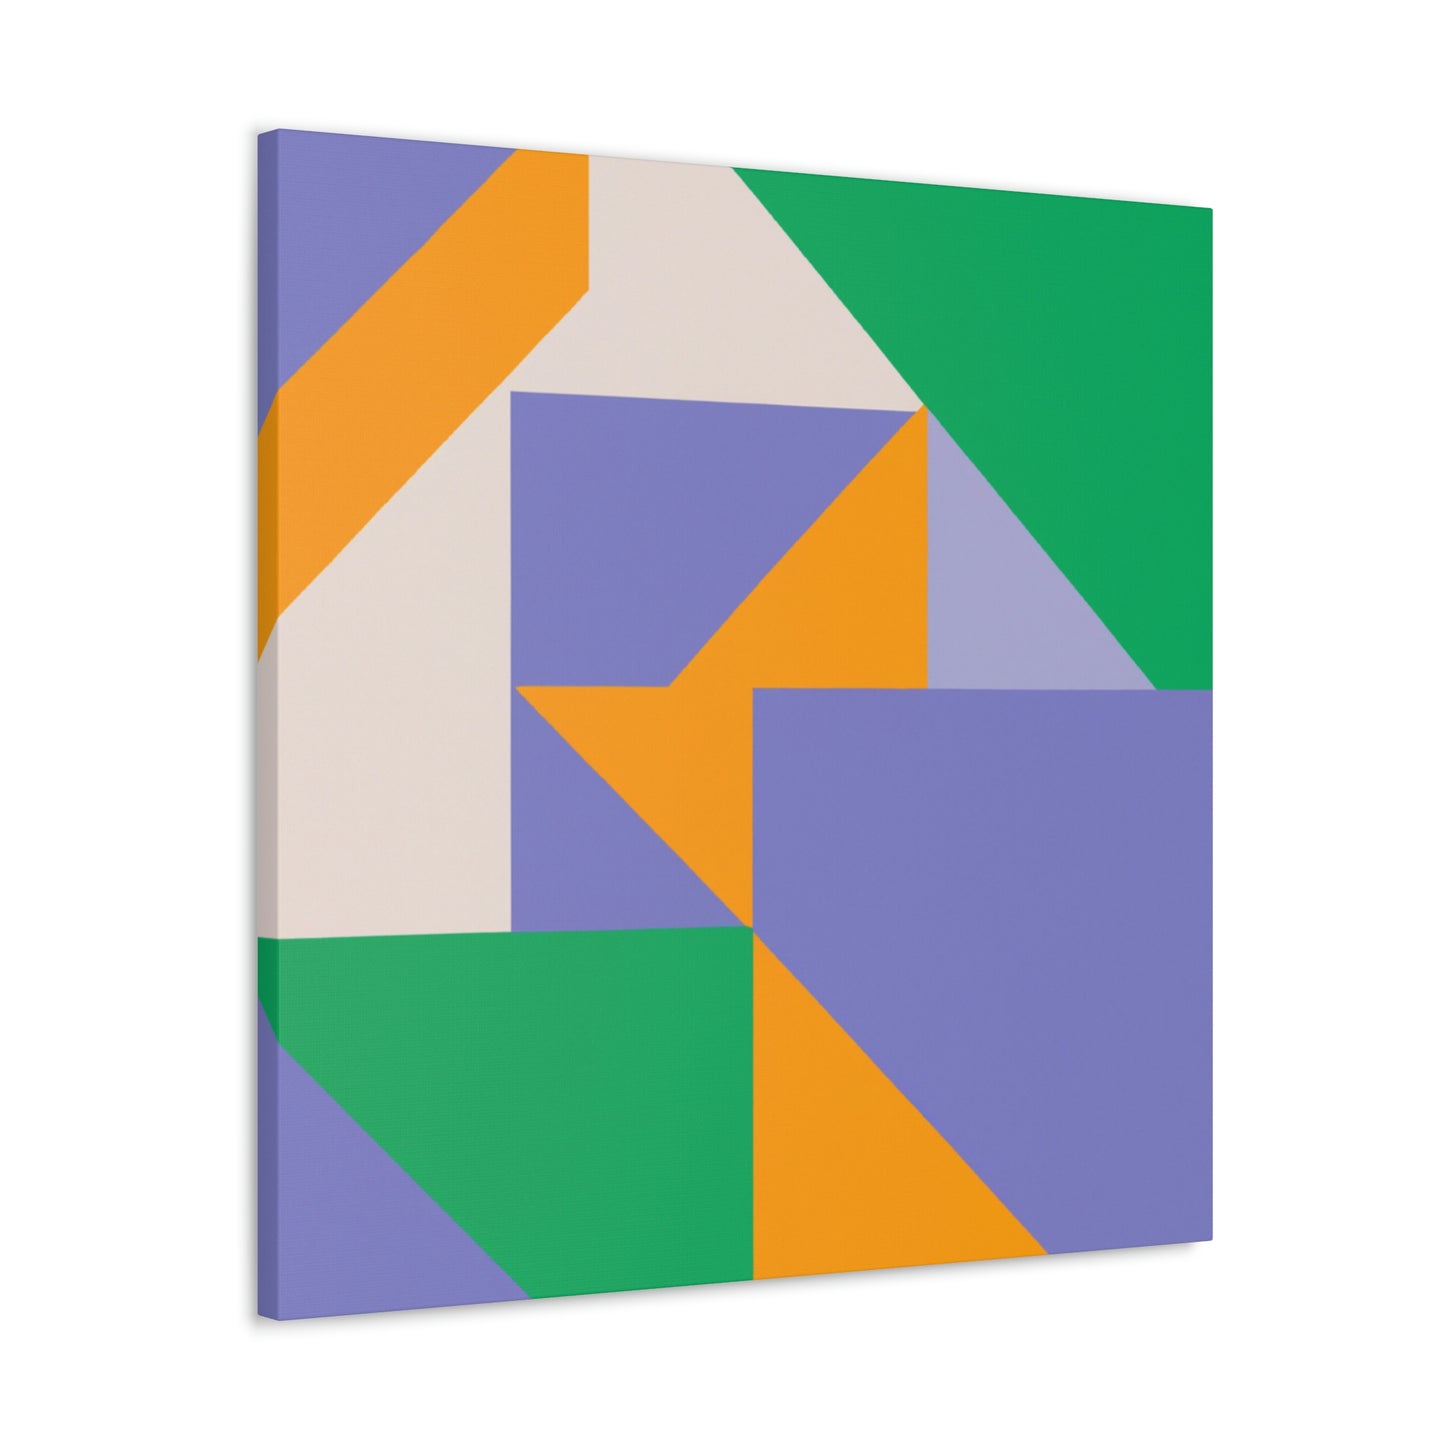 .

Eliot Mason. - Geometric Canvas Wall Art